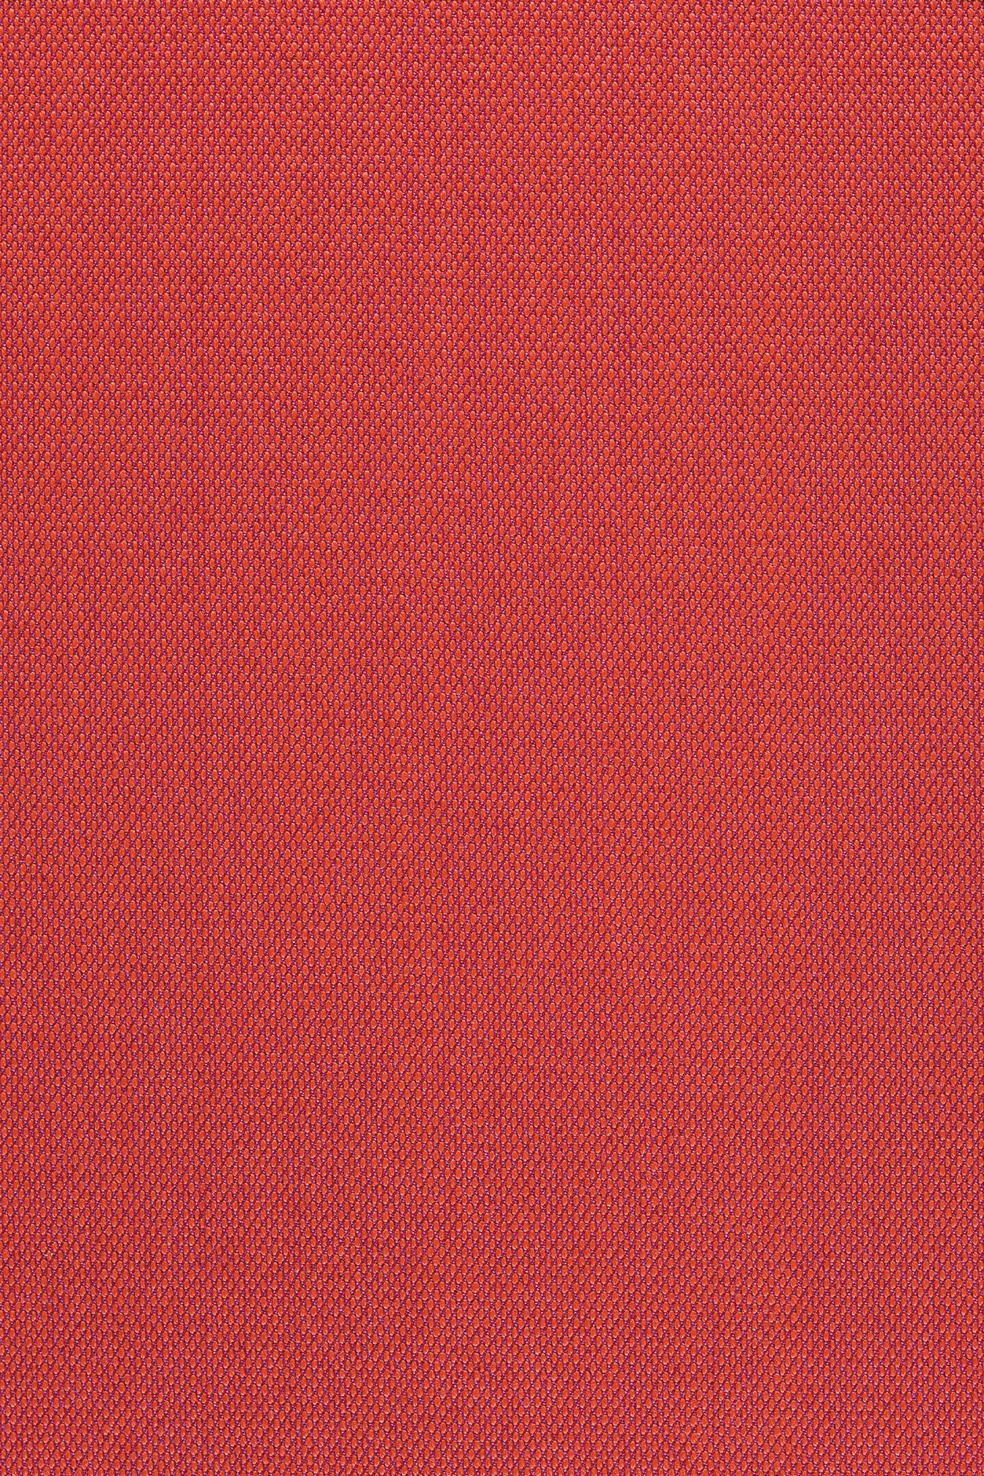 Fabric sample Steelcut Trio 3 553 red